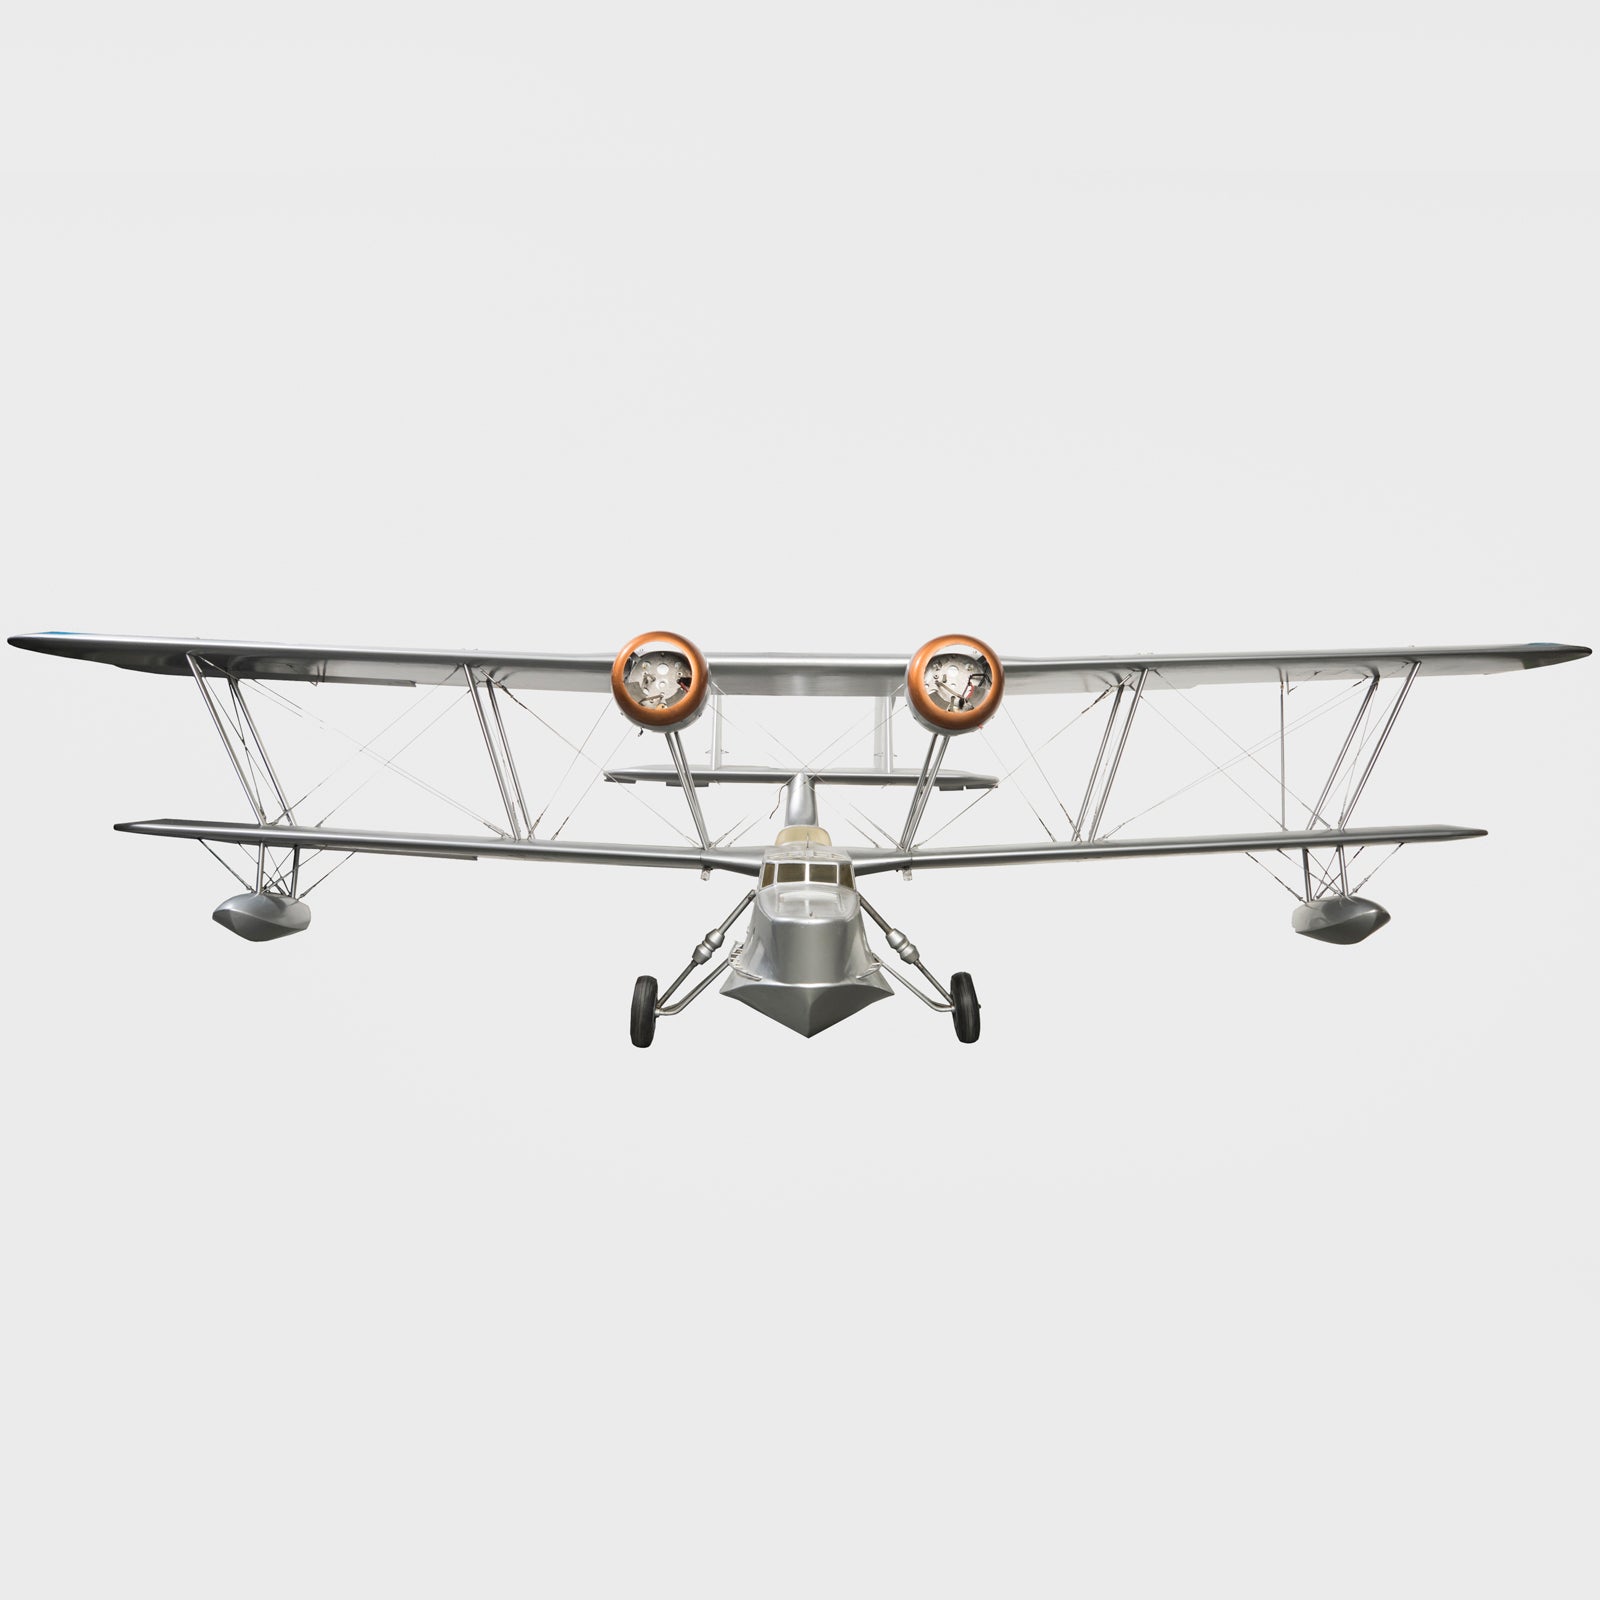 Large Vintage World War I Era Airplane model